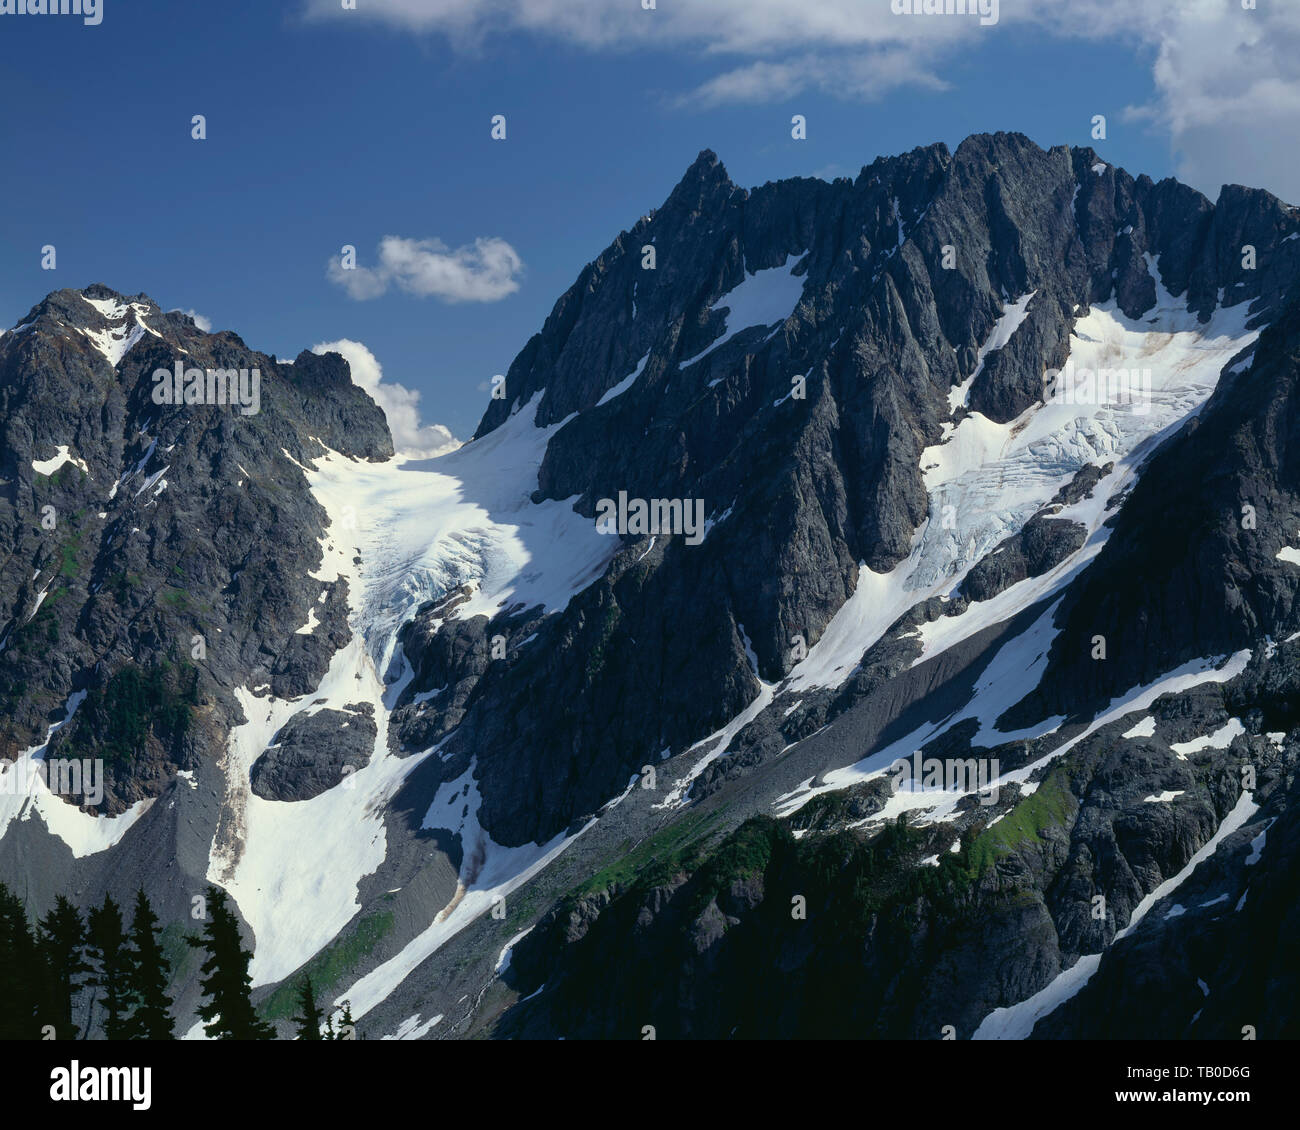 USA, Washington, North Cascades National Park, Pelton Peak (left) and Magic Mountain (center) tower above Pelton Basin. Stock Photo